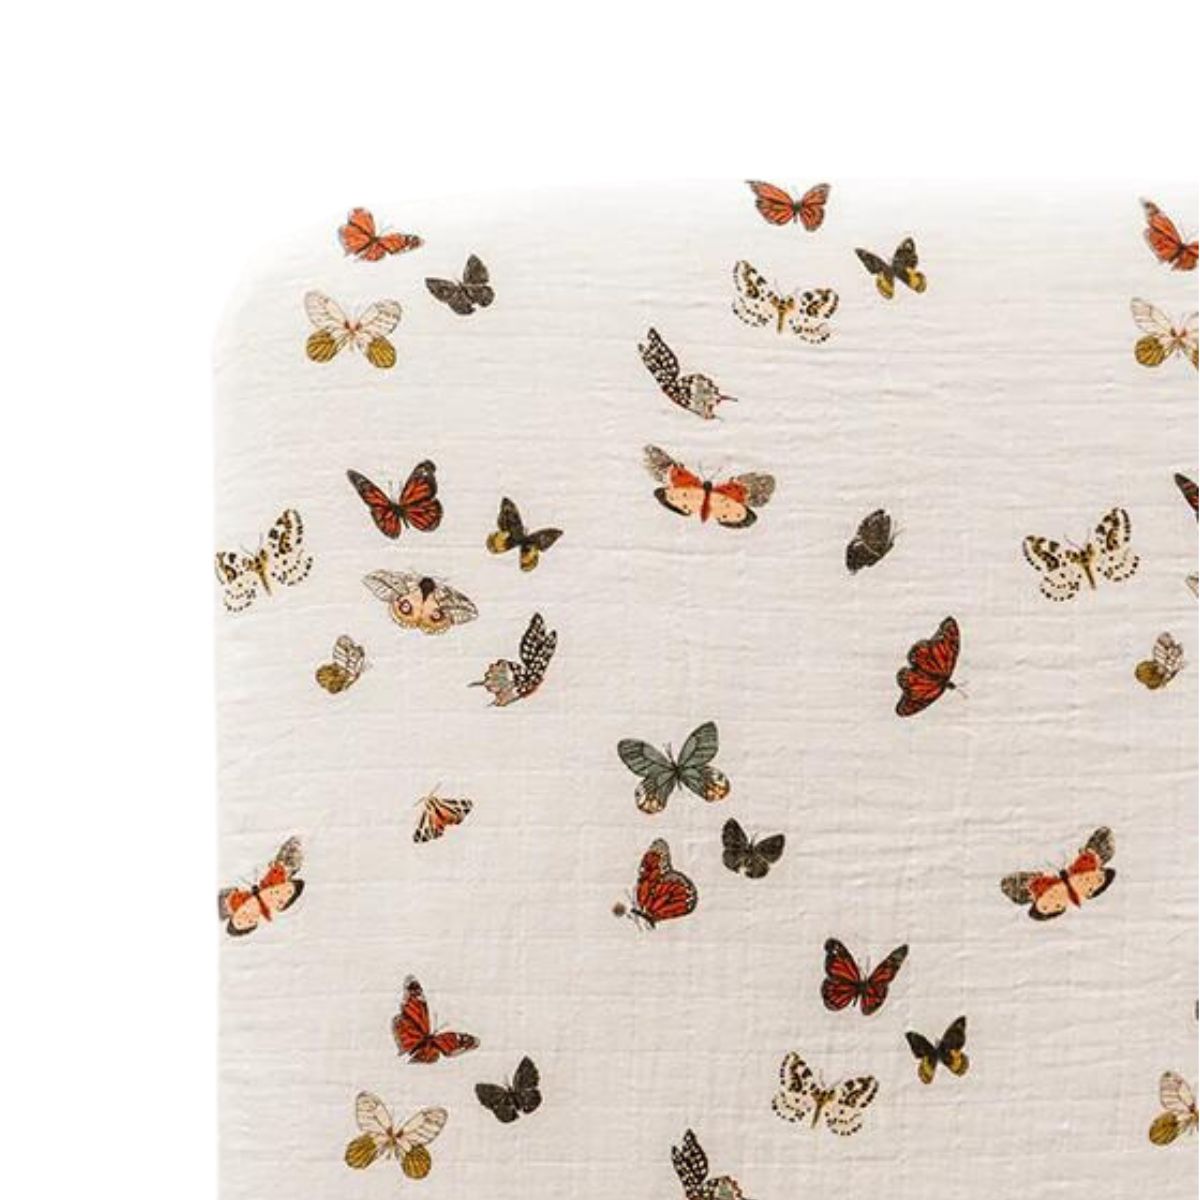 Cotton Muslin Crib Sheet - Butterfly Migration